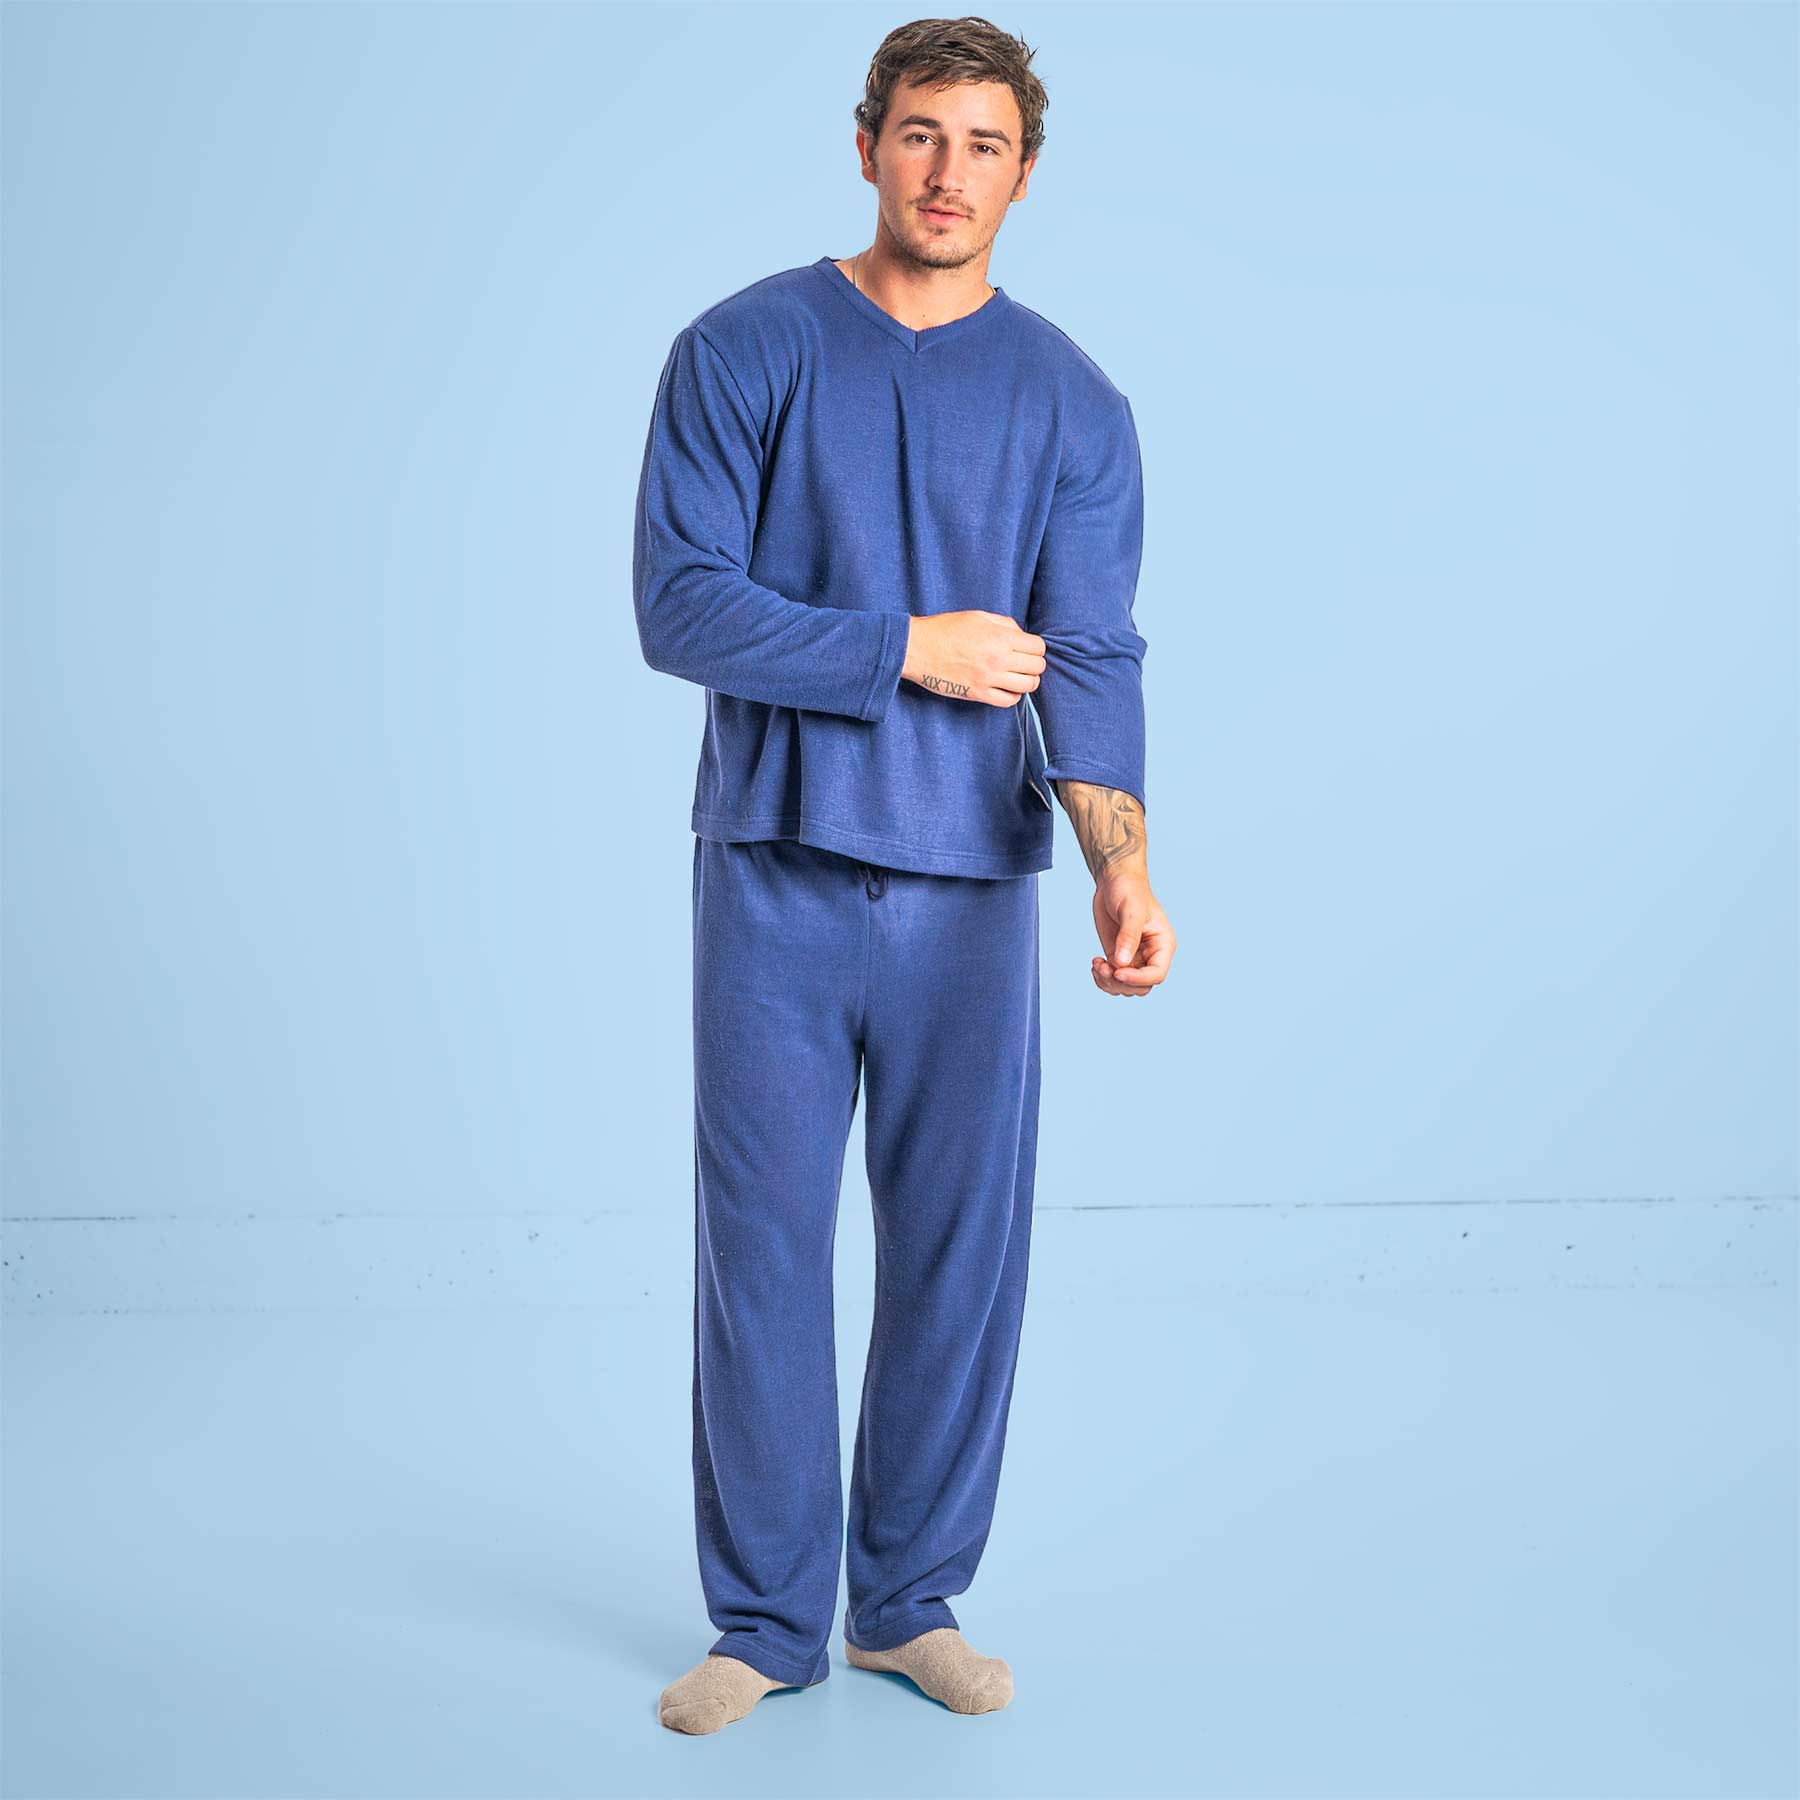 Organic Matching Winter Collection Pajamas - Unisex/Men's